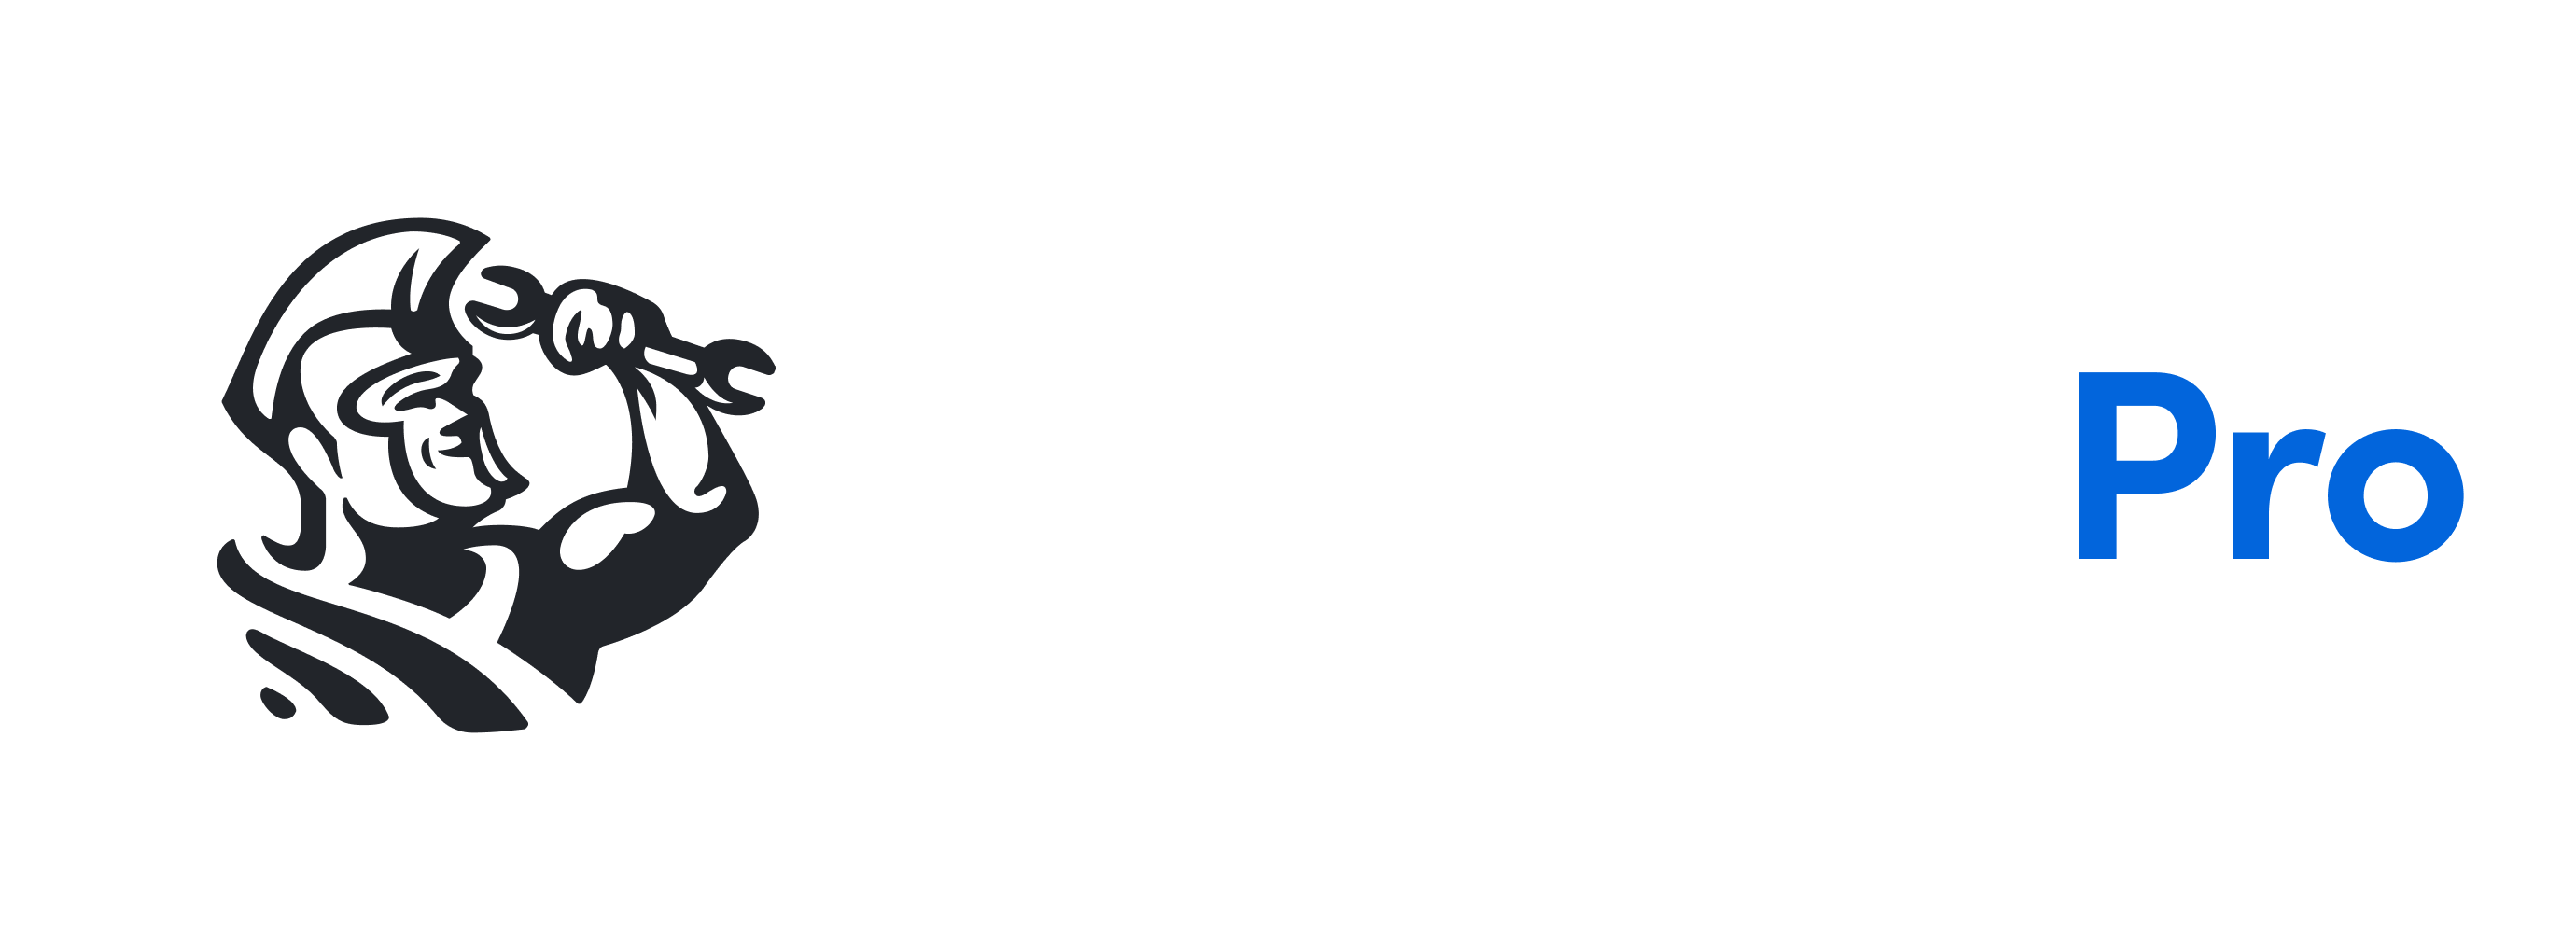 PLG Fleet Pro Logo